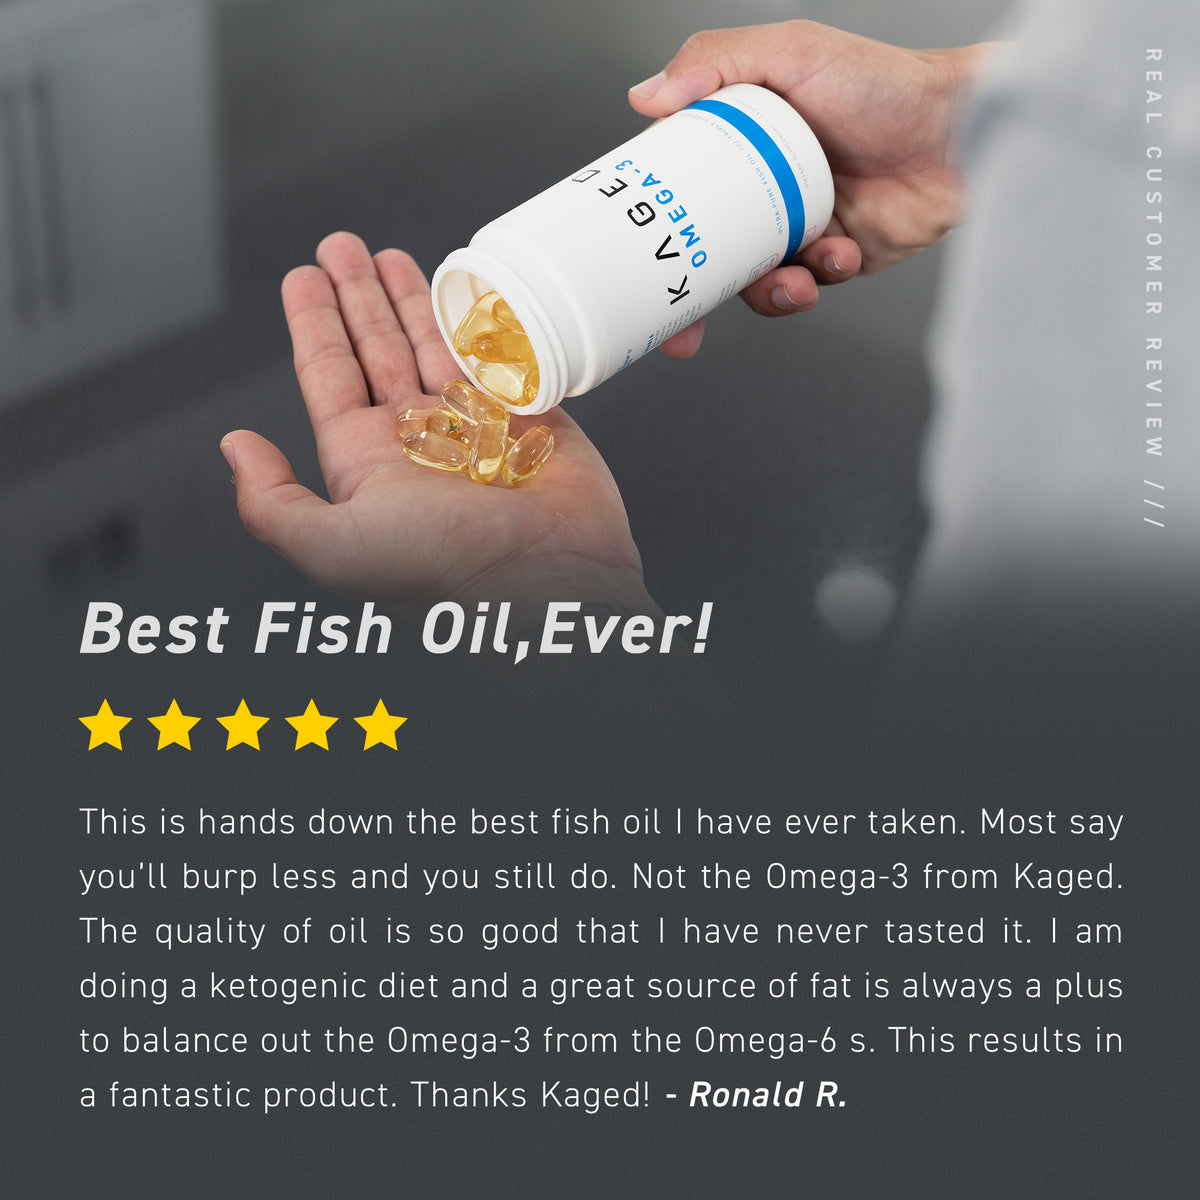 Ultimate Omega, 100% Wild-Caught Fish Oil